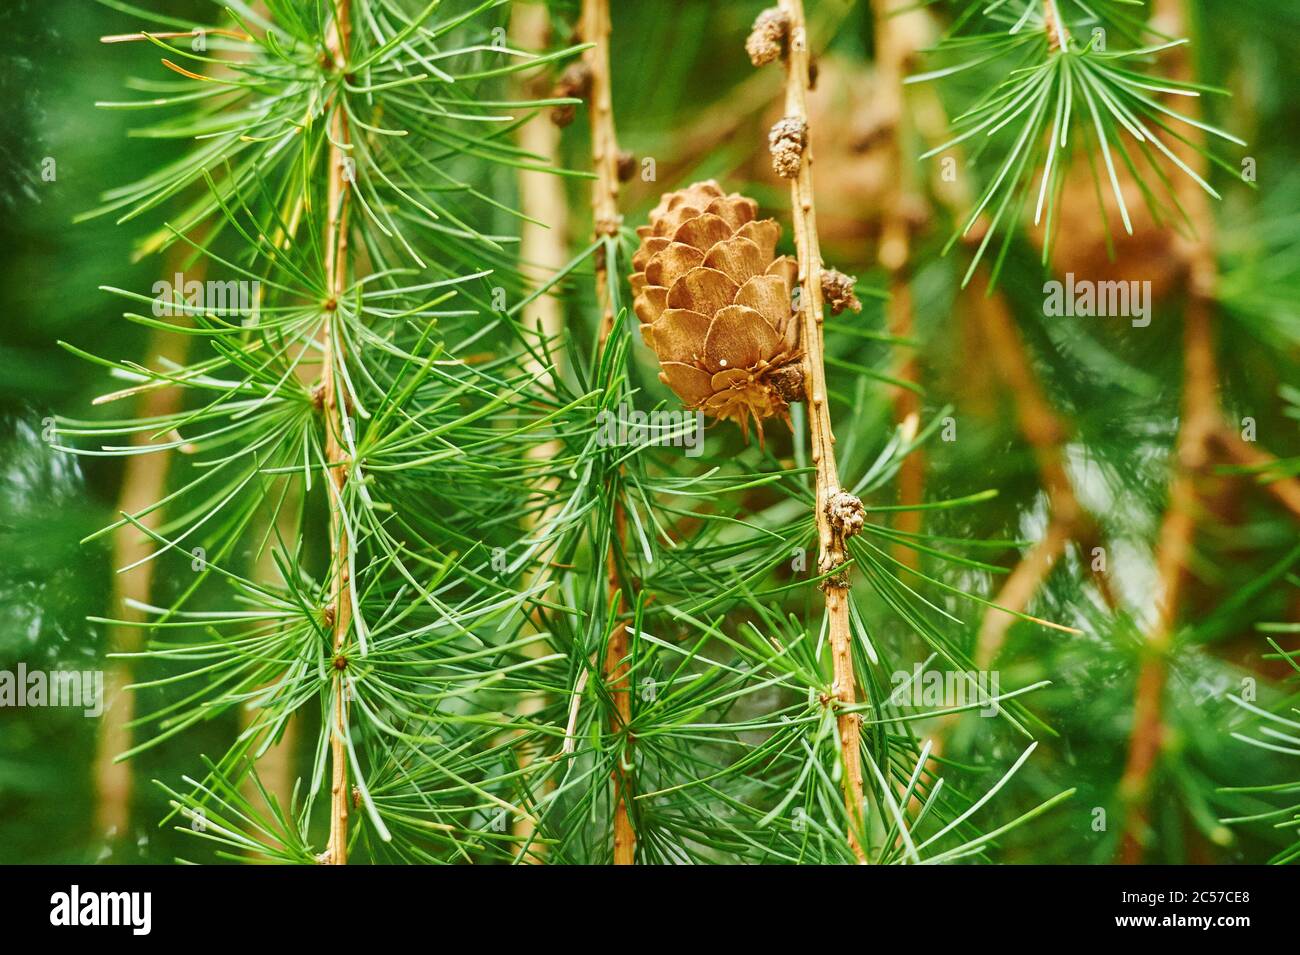 European larch, Larix decidua, branches, cones, close-up, Bayern, Germany Stock Photo